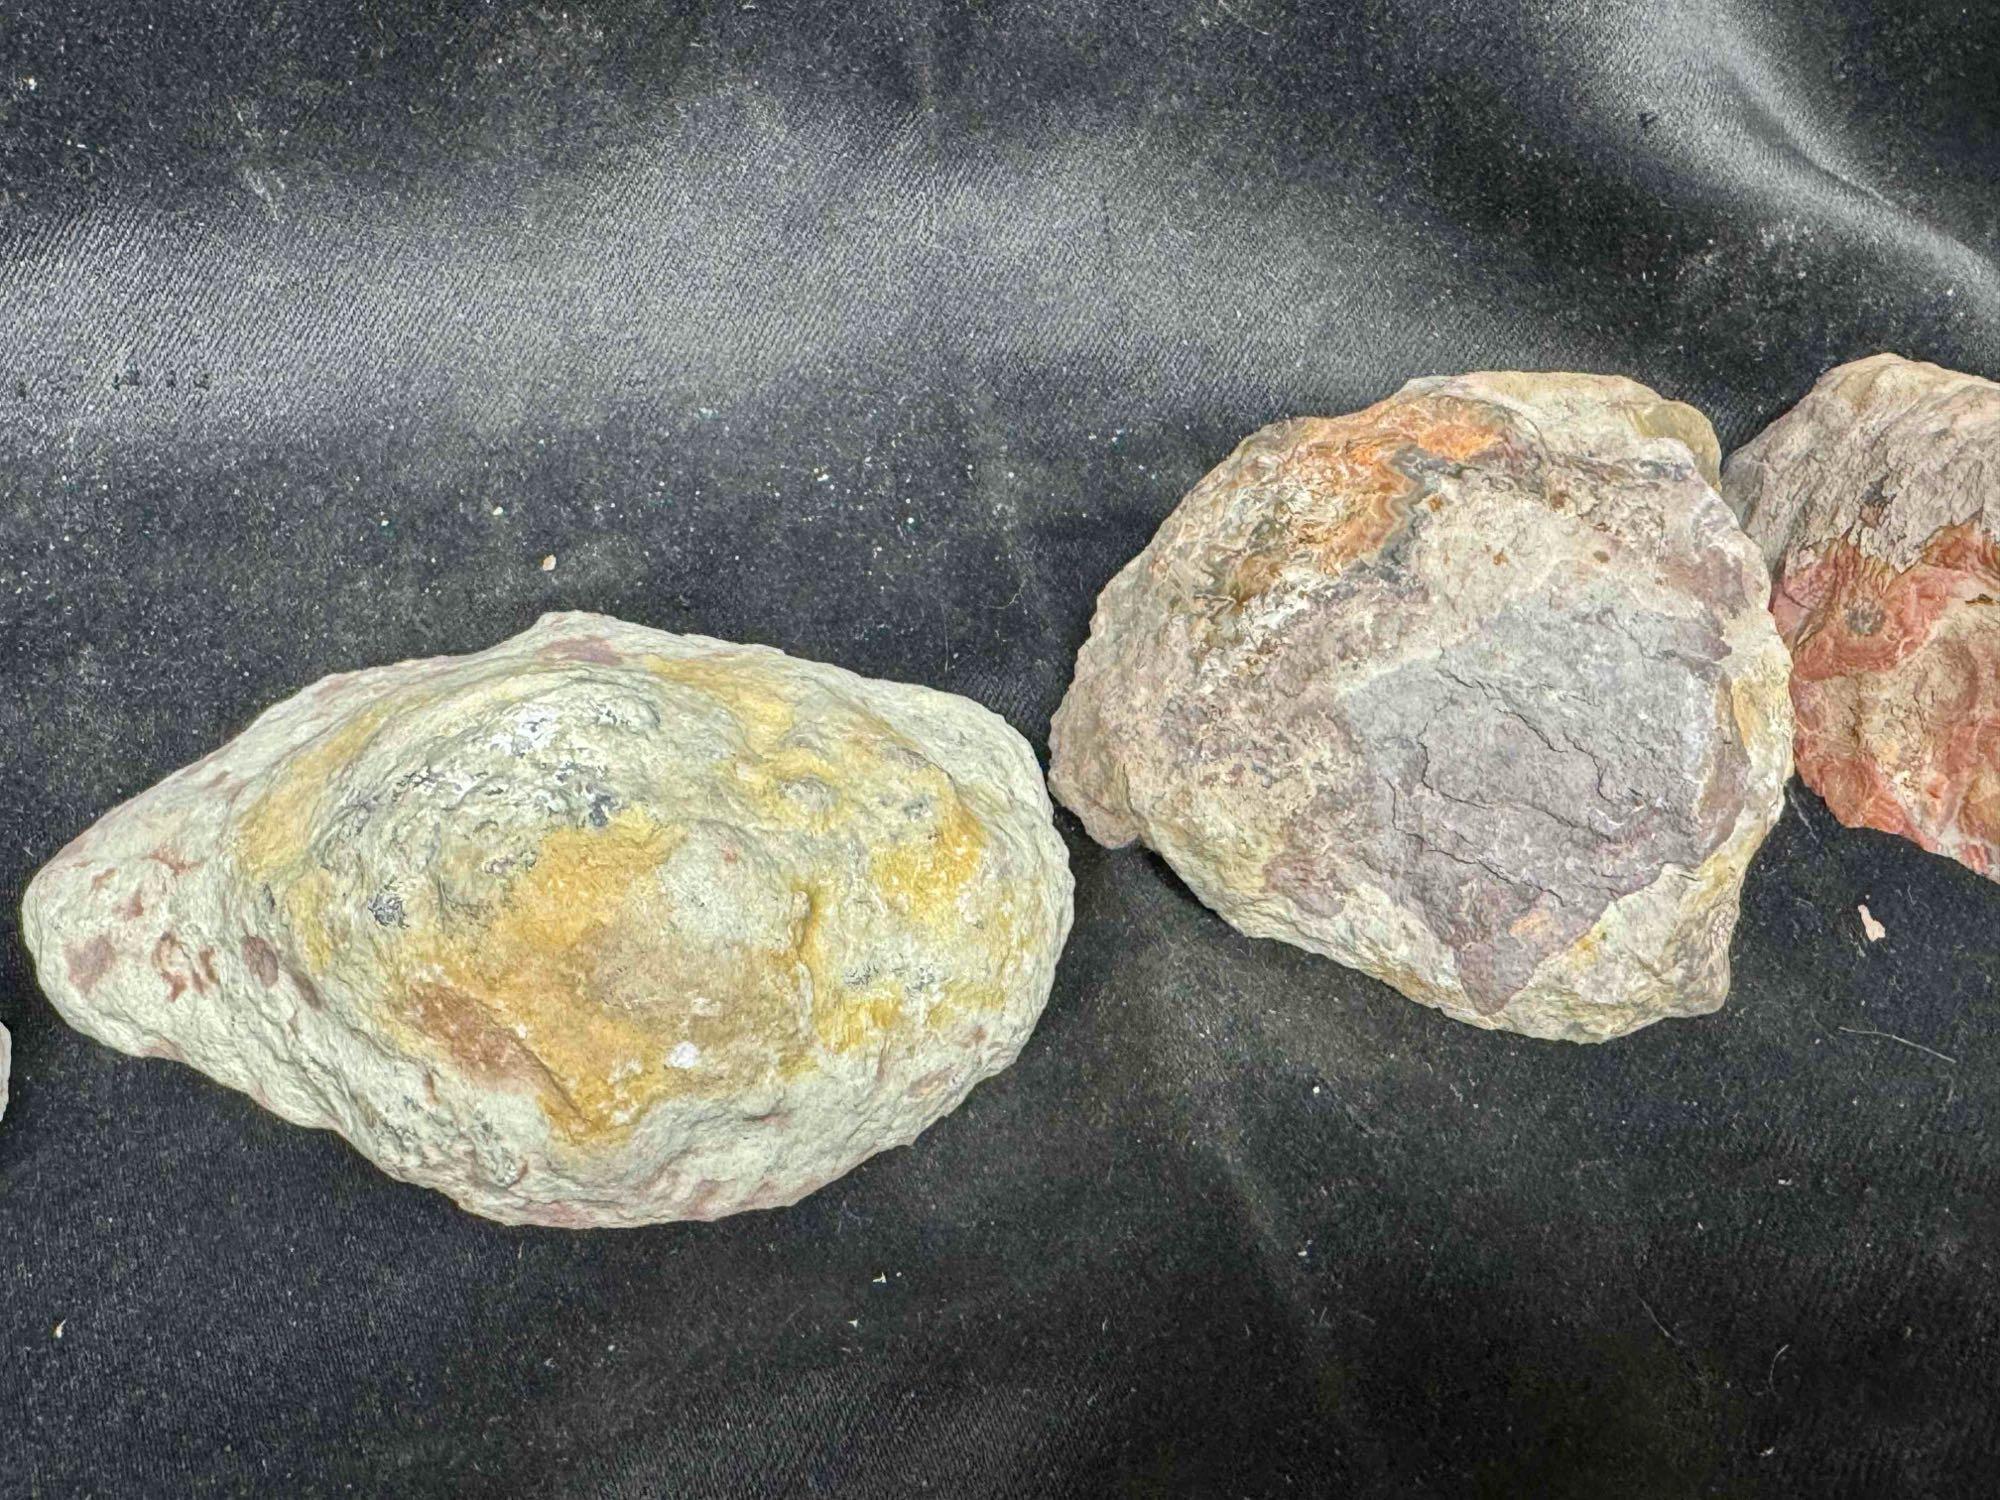 6 Reddish Geode Halves Specimens